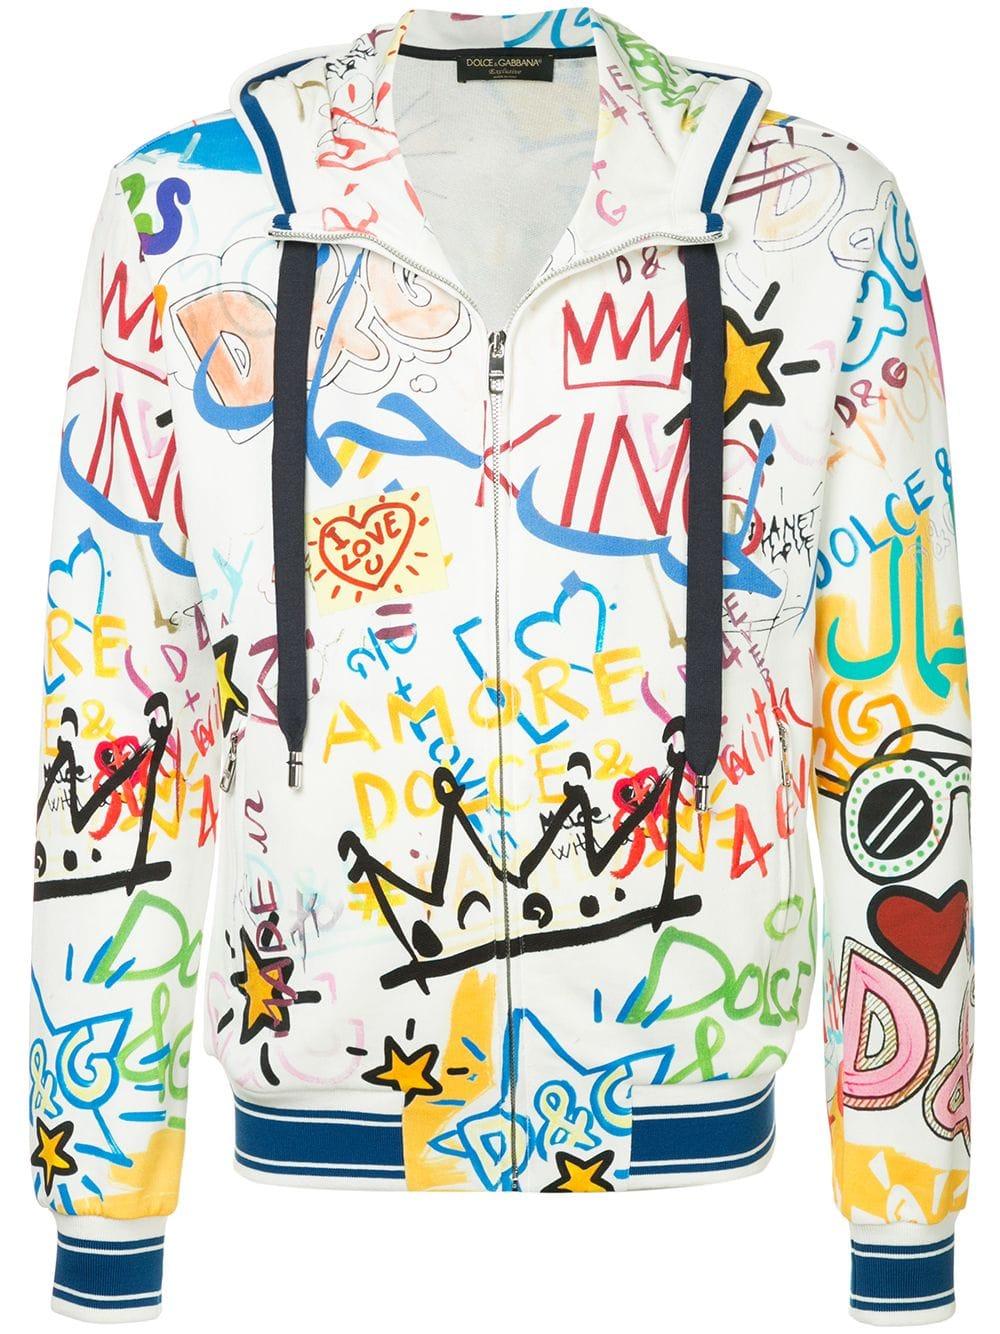 Dolce & Gabbana Graffiti Print Zip Hoodie in White for Men - Lyst